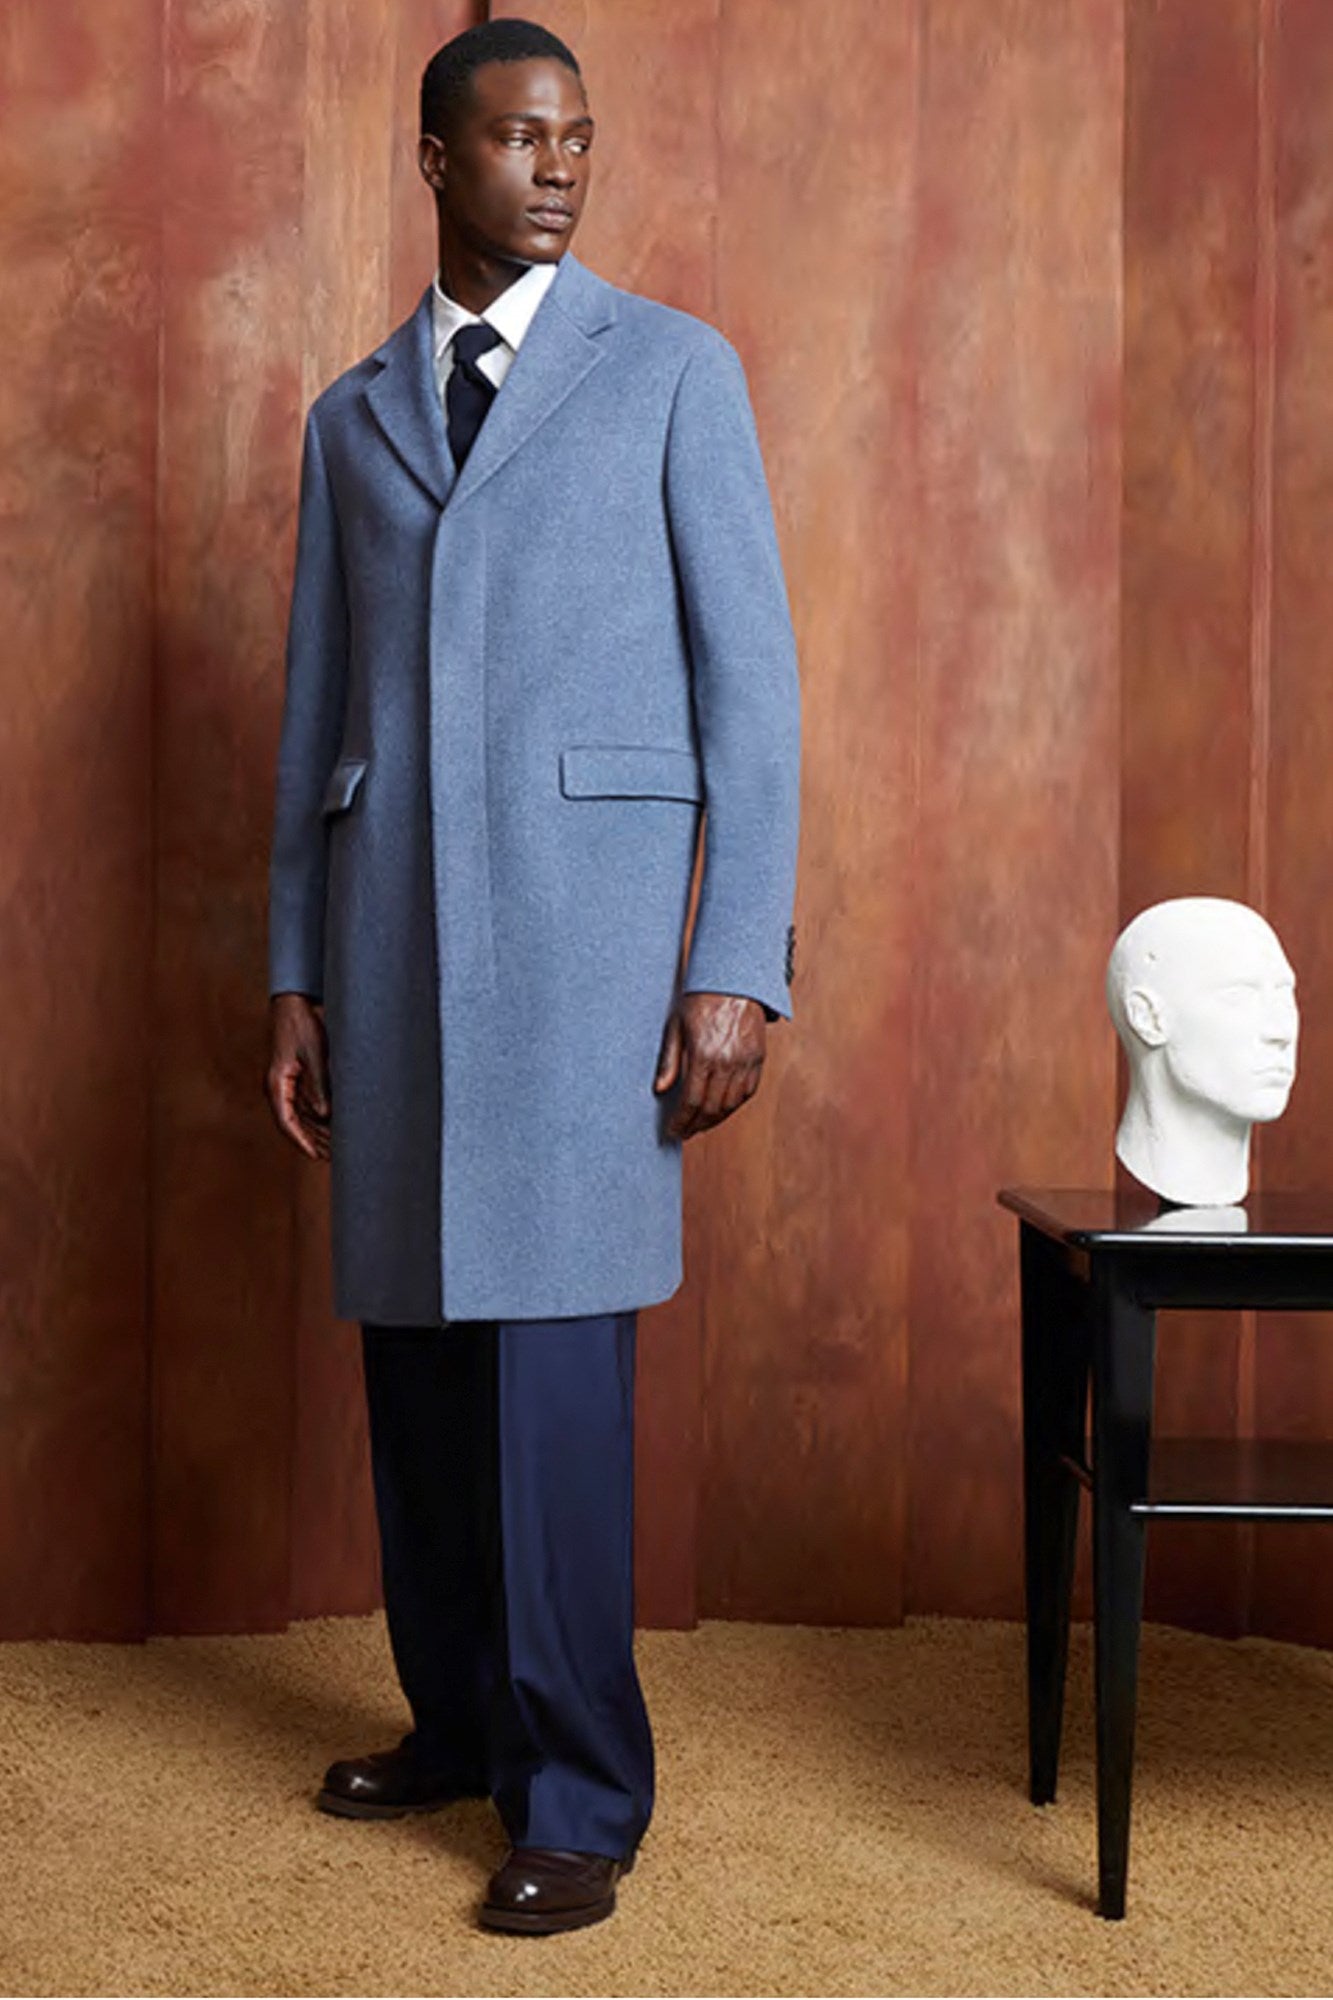 MERCER LIGHT BLUE OVERCOAT - MENS - Cardinal of Canada-US-Mercer - blue wool blend topcoat 41.5 inch length